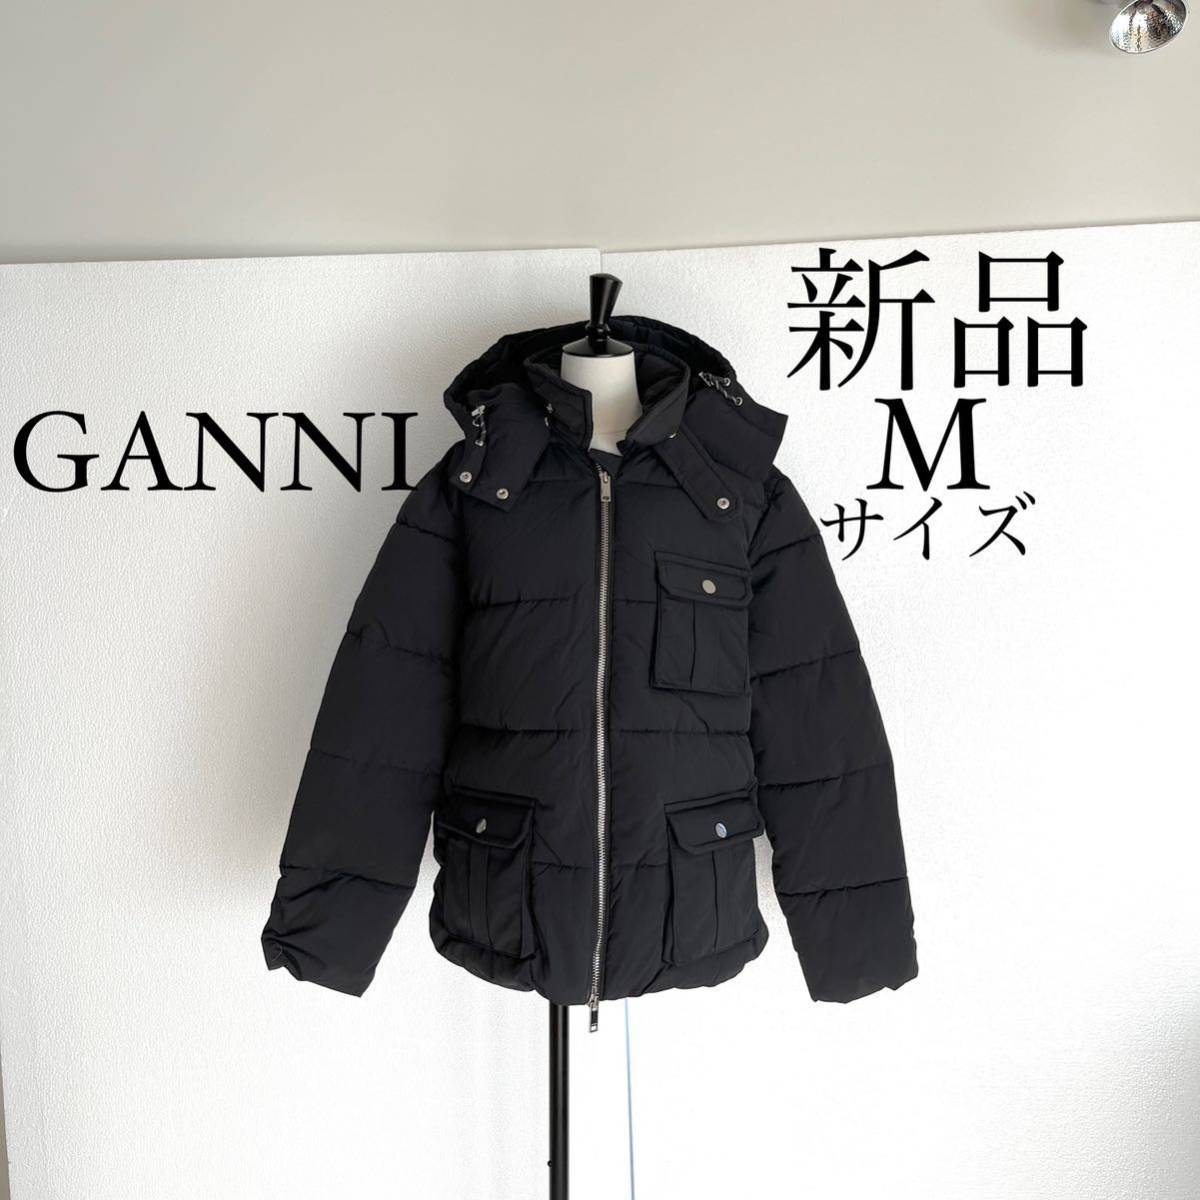 GANNI ガニー ロゴ入りダウンジャケット ブラック M(38)サイズ-